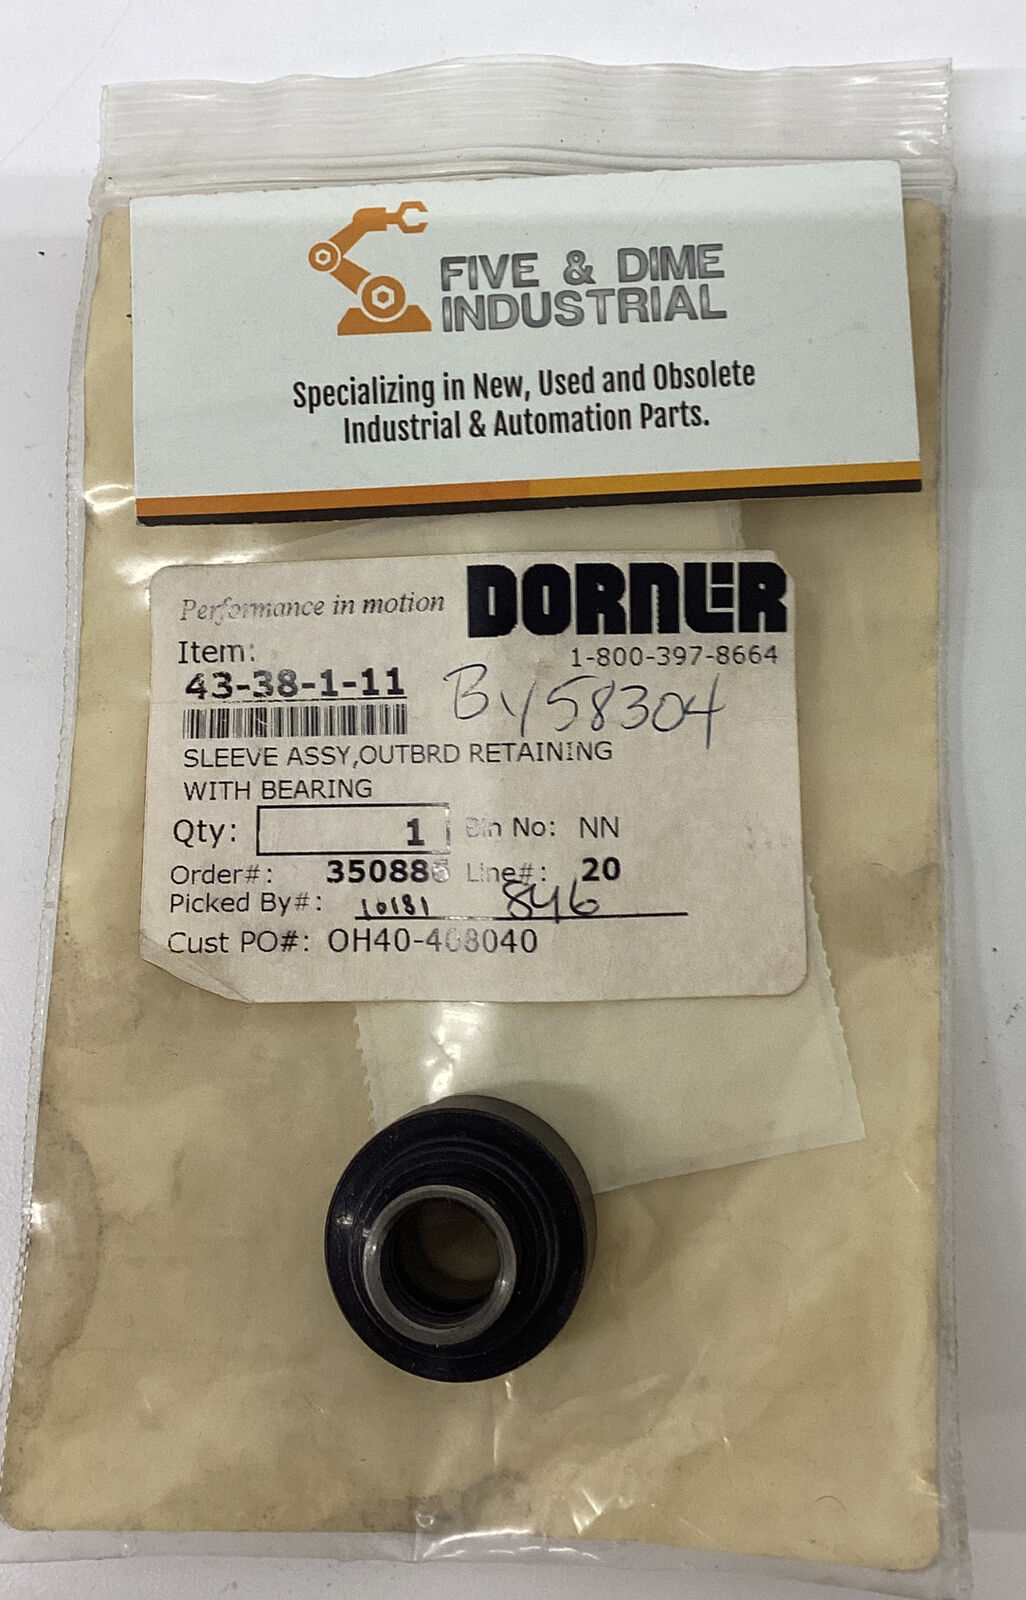 Dorner 43-38-1-11 Outboard Bearing (YE262)